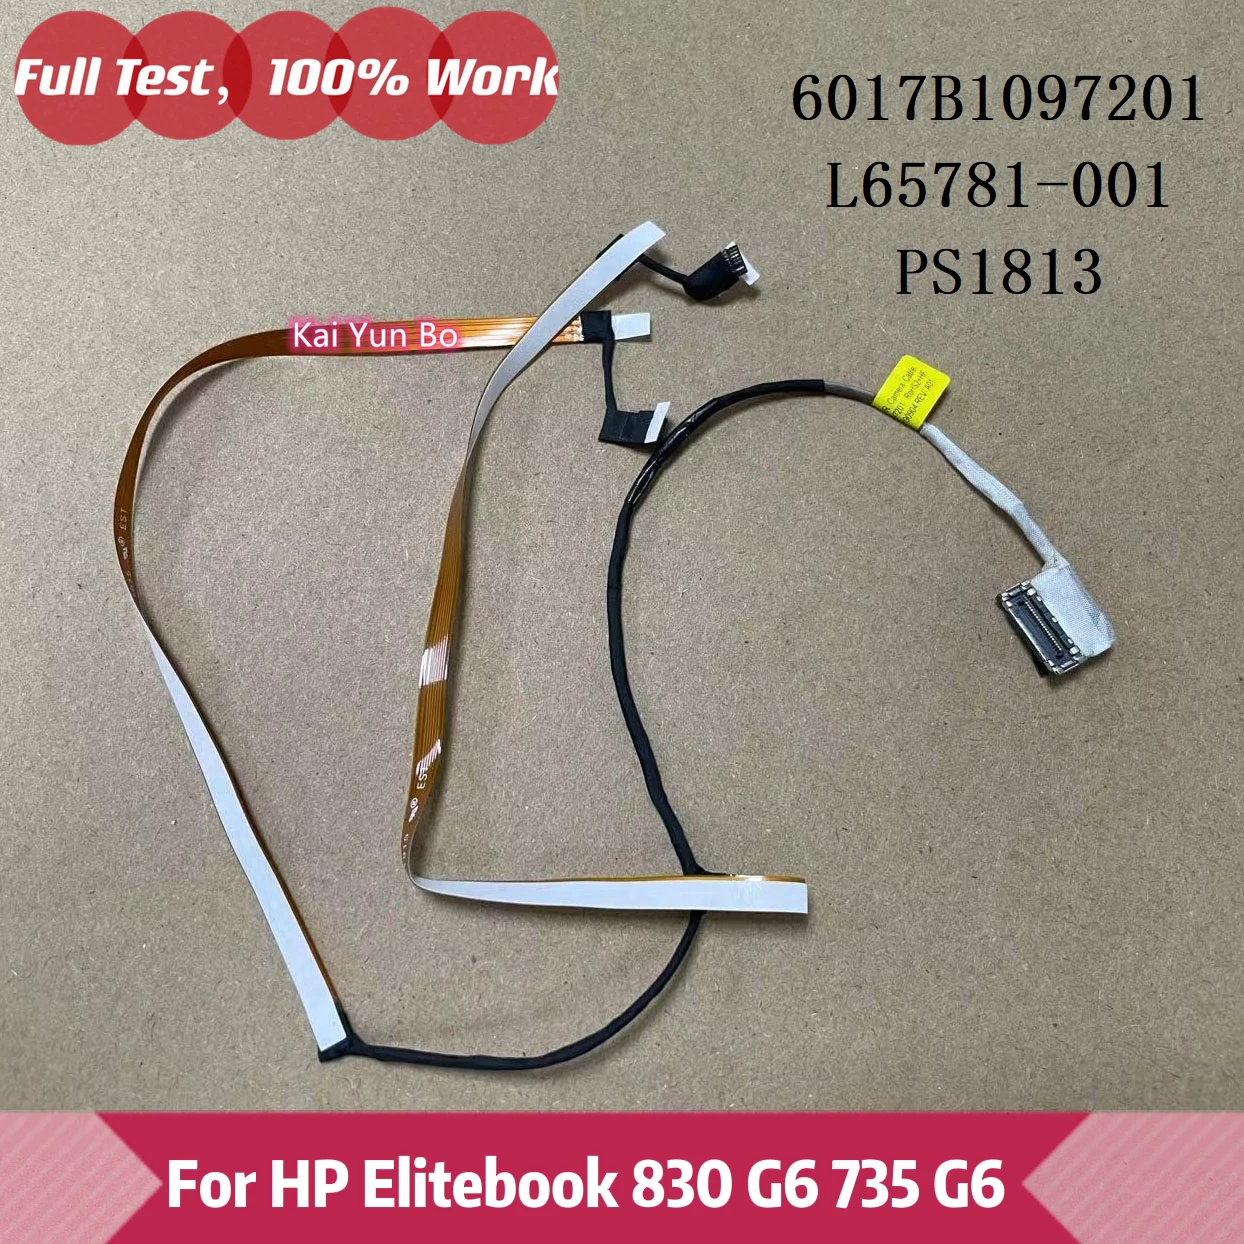 Dizüstü Kızılötesi Kamera HP kablosu Elitebook 830 G6 735 G6 6017B1097201 L65781-001 PS1813